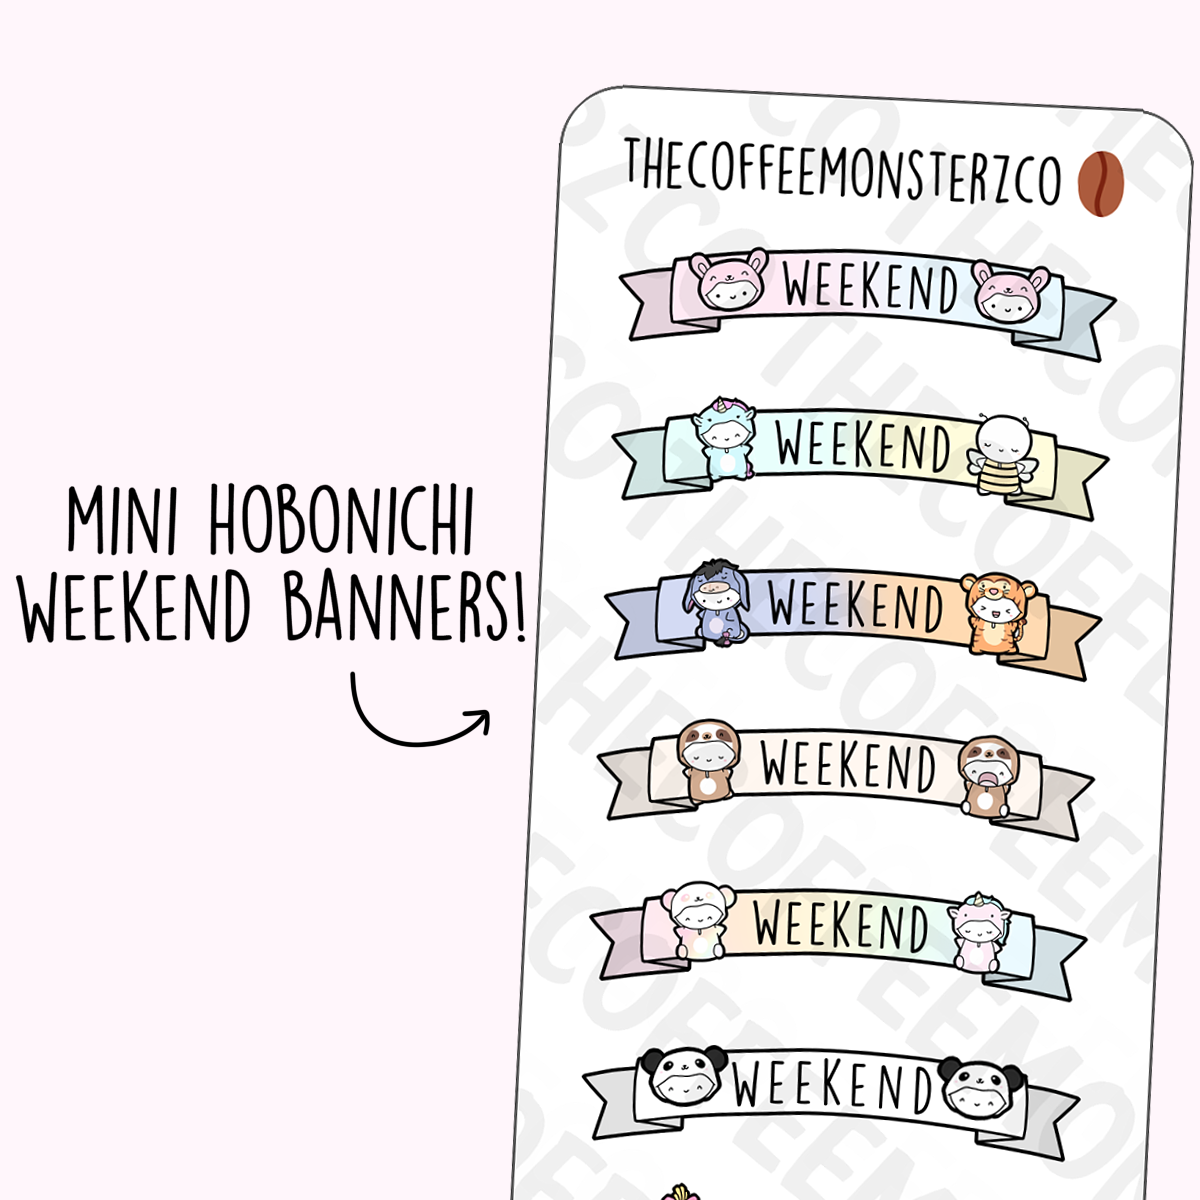 Mini Onesie Weekend Banners (Hobonichi)